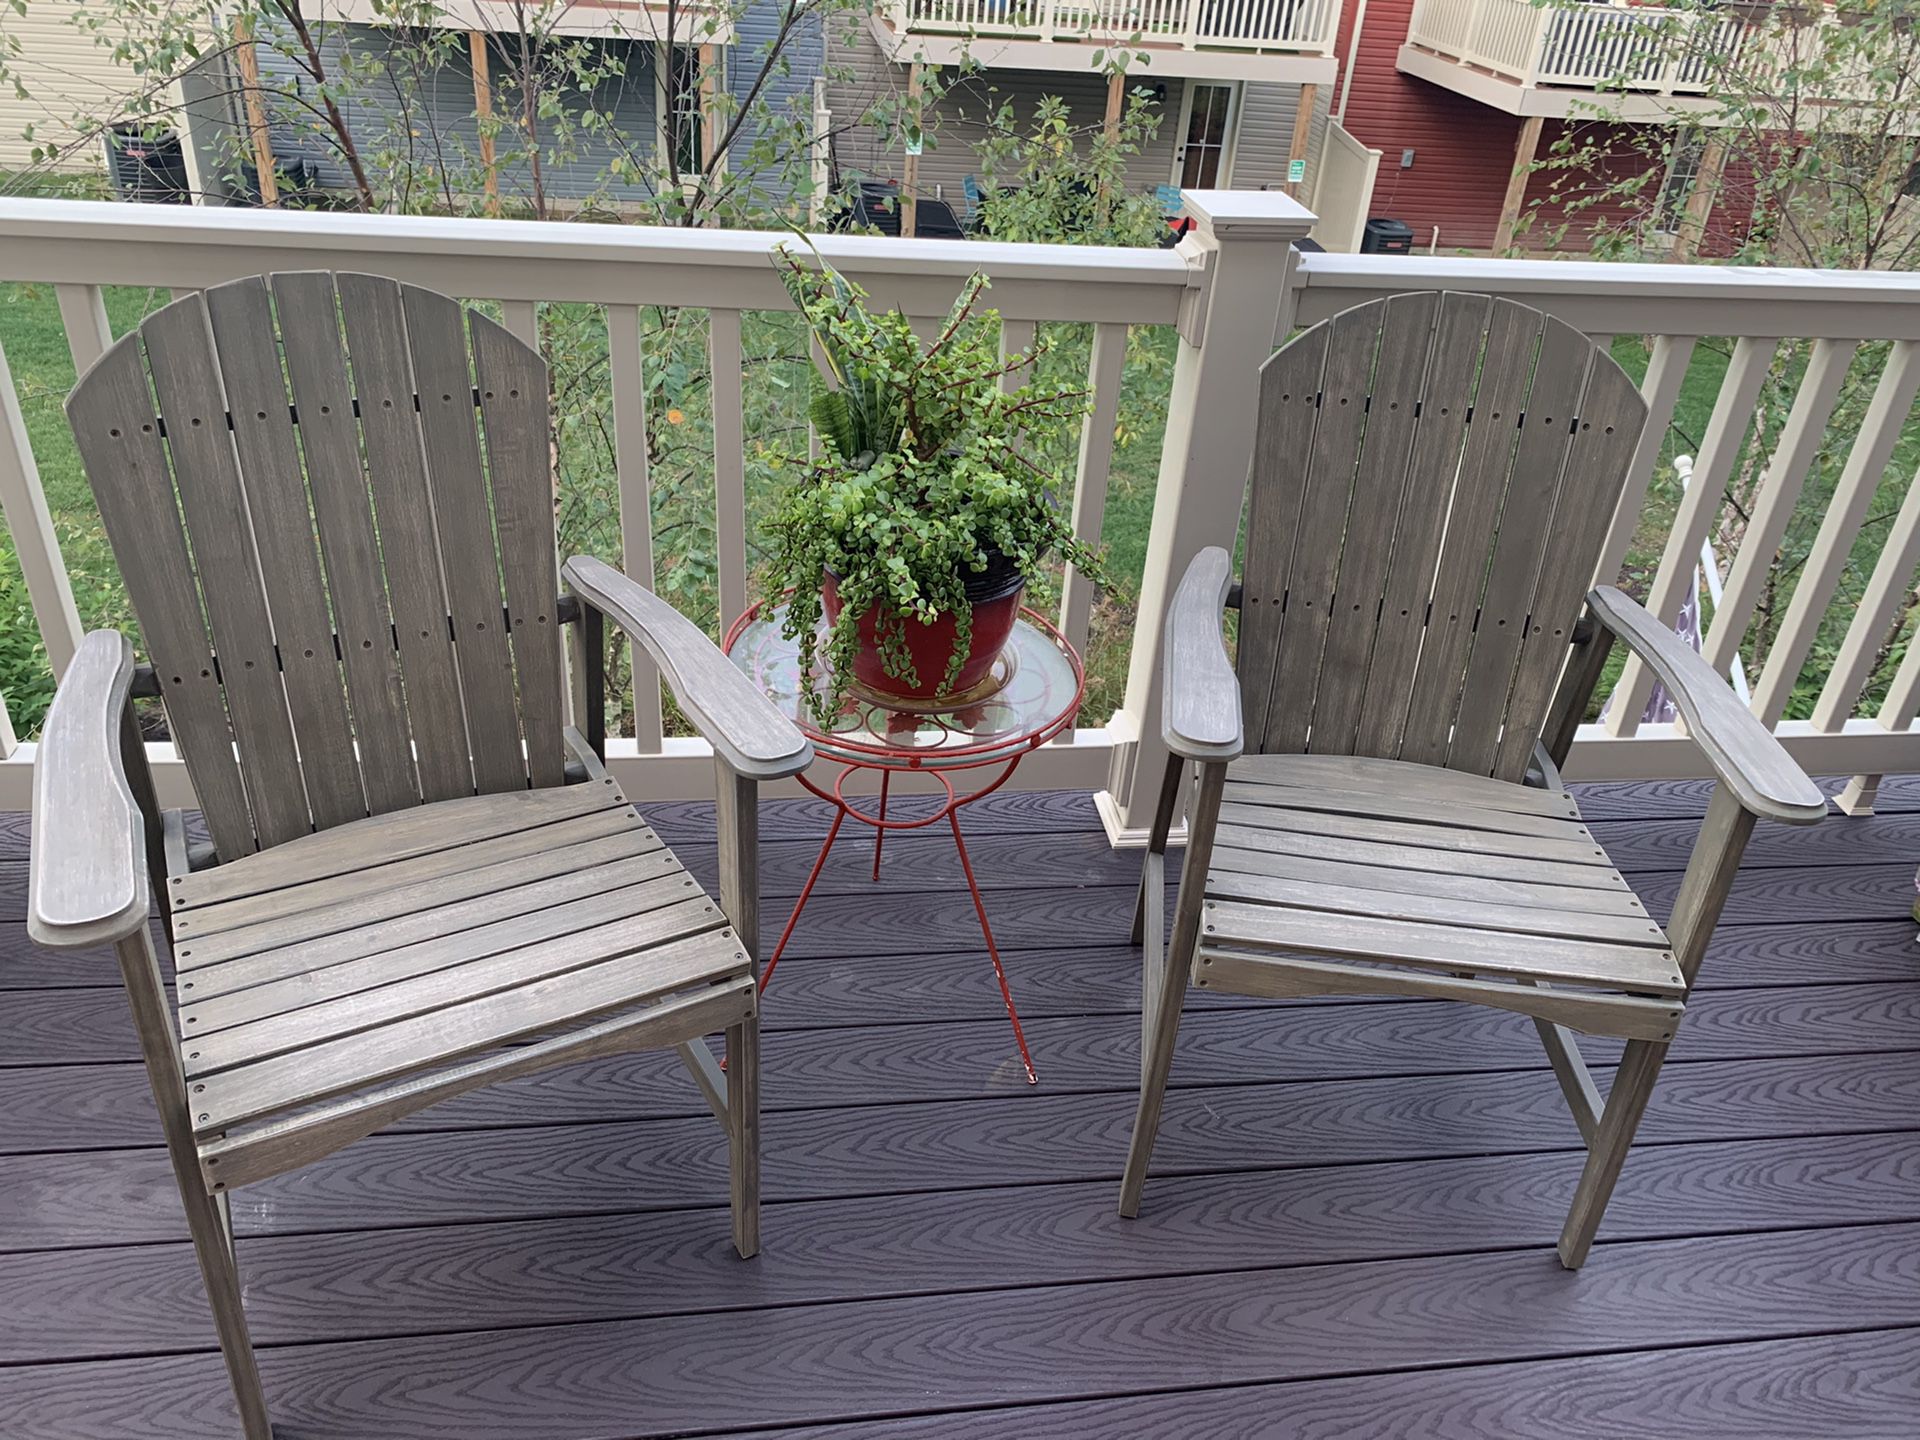 Set of Wooden Adirondack Chairs